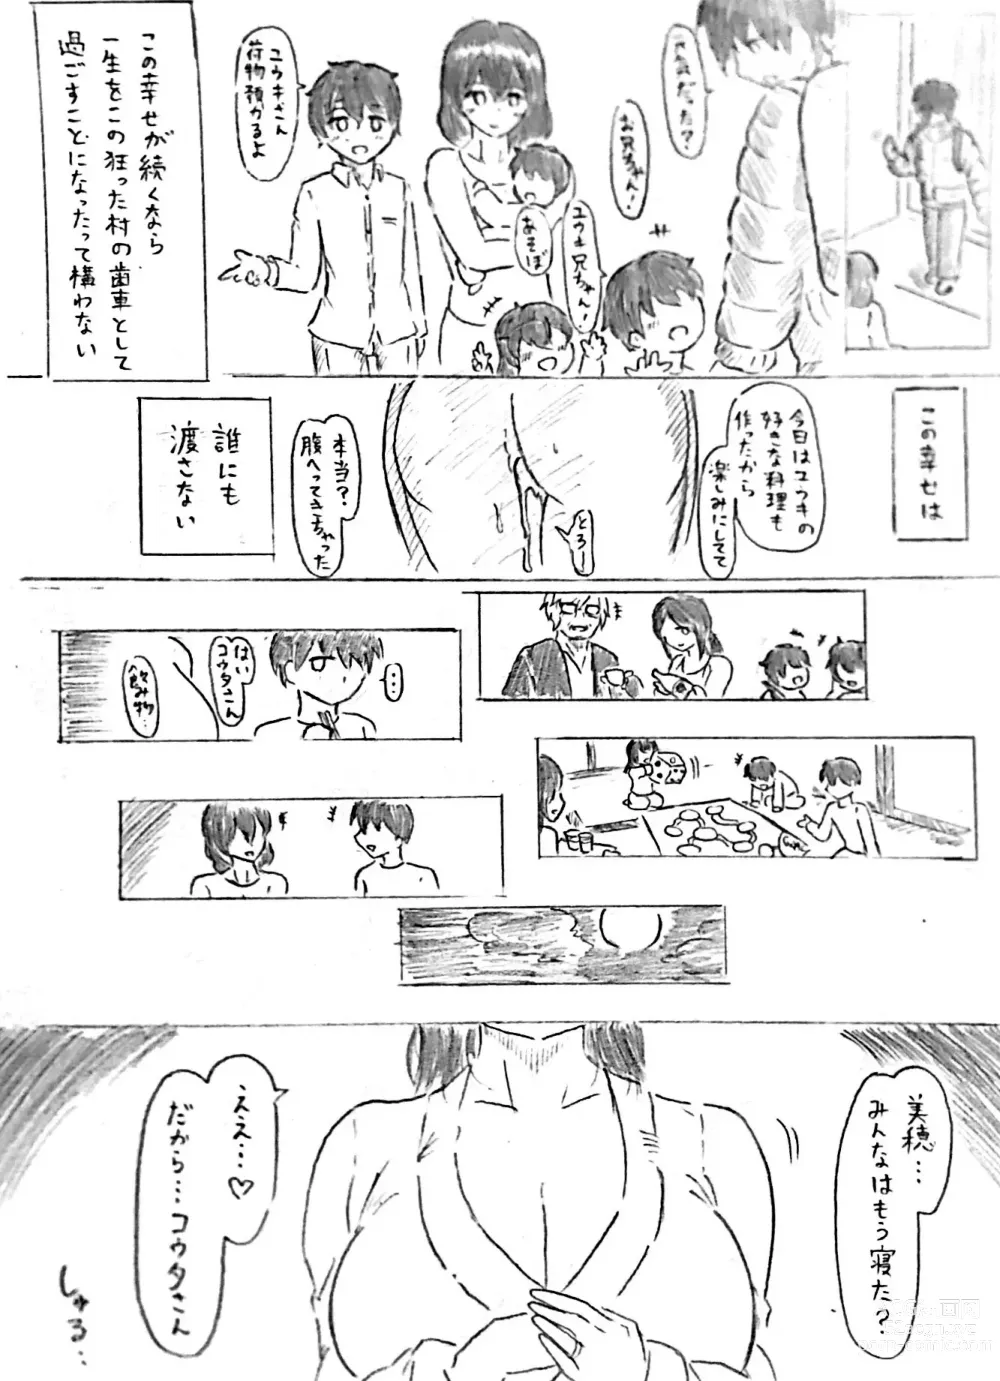 Page 10 of doujinshi Harayome no Mura Sonogo